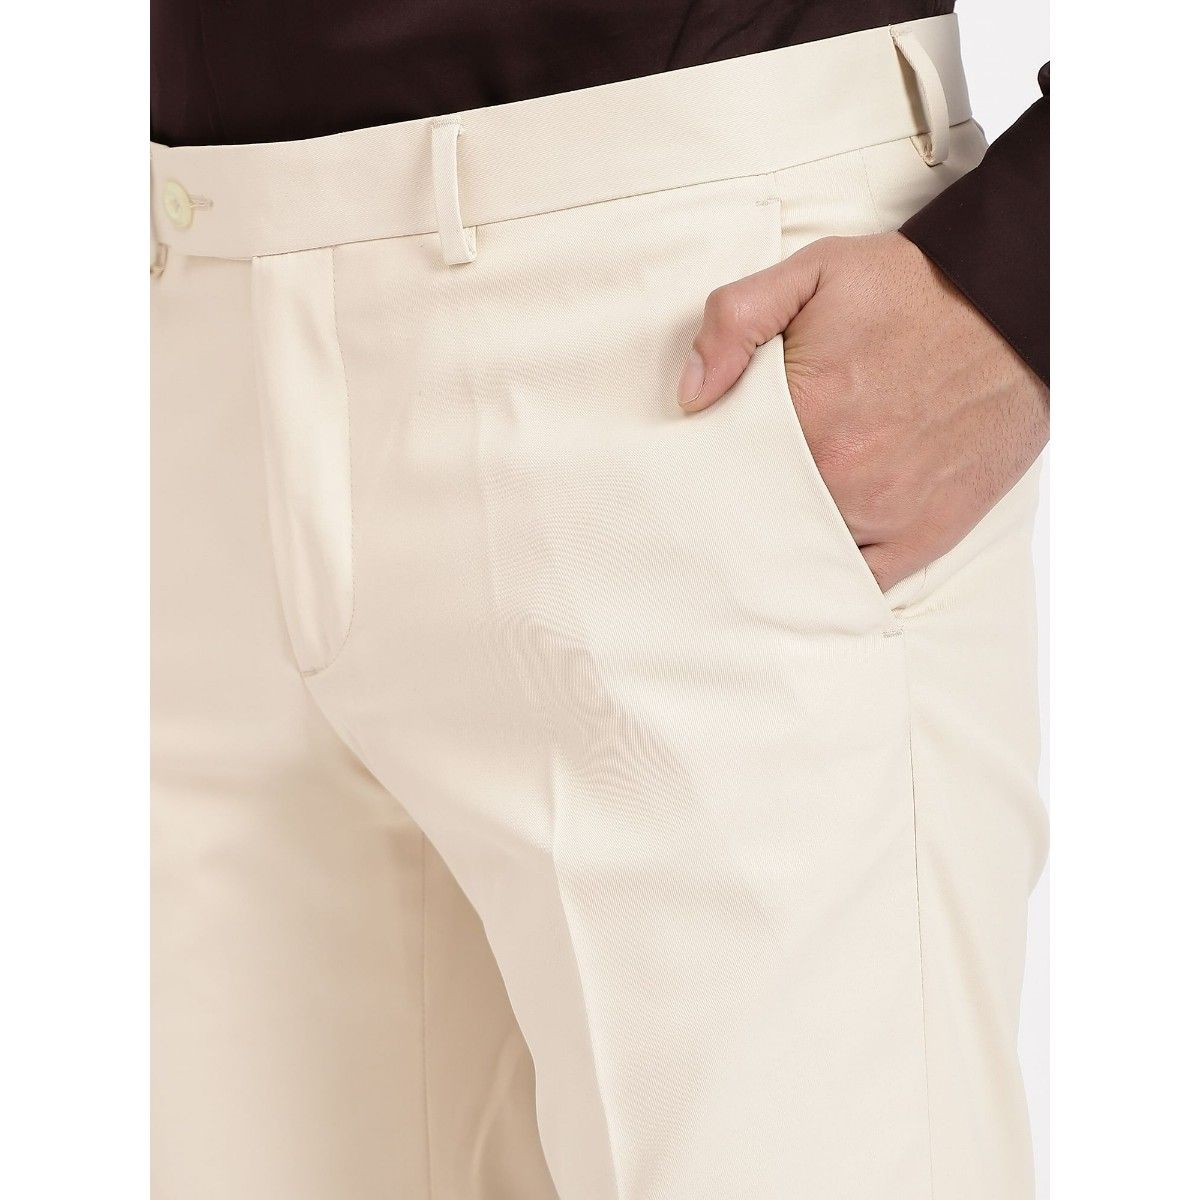 Buy Arrow Autoflex Twill Polyester Formal Trousers Online